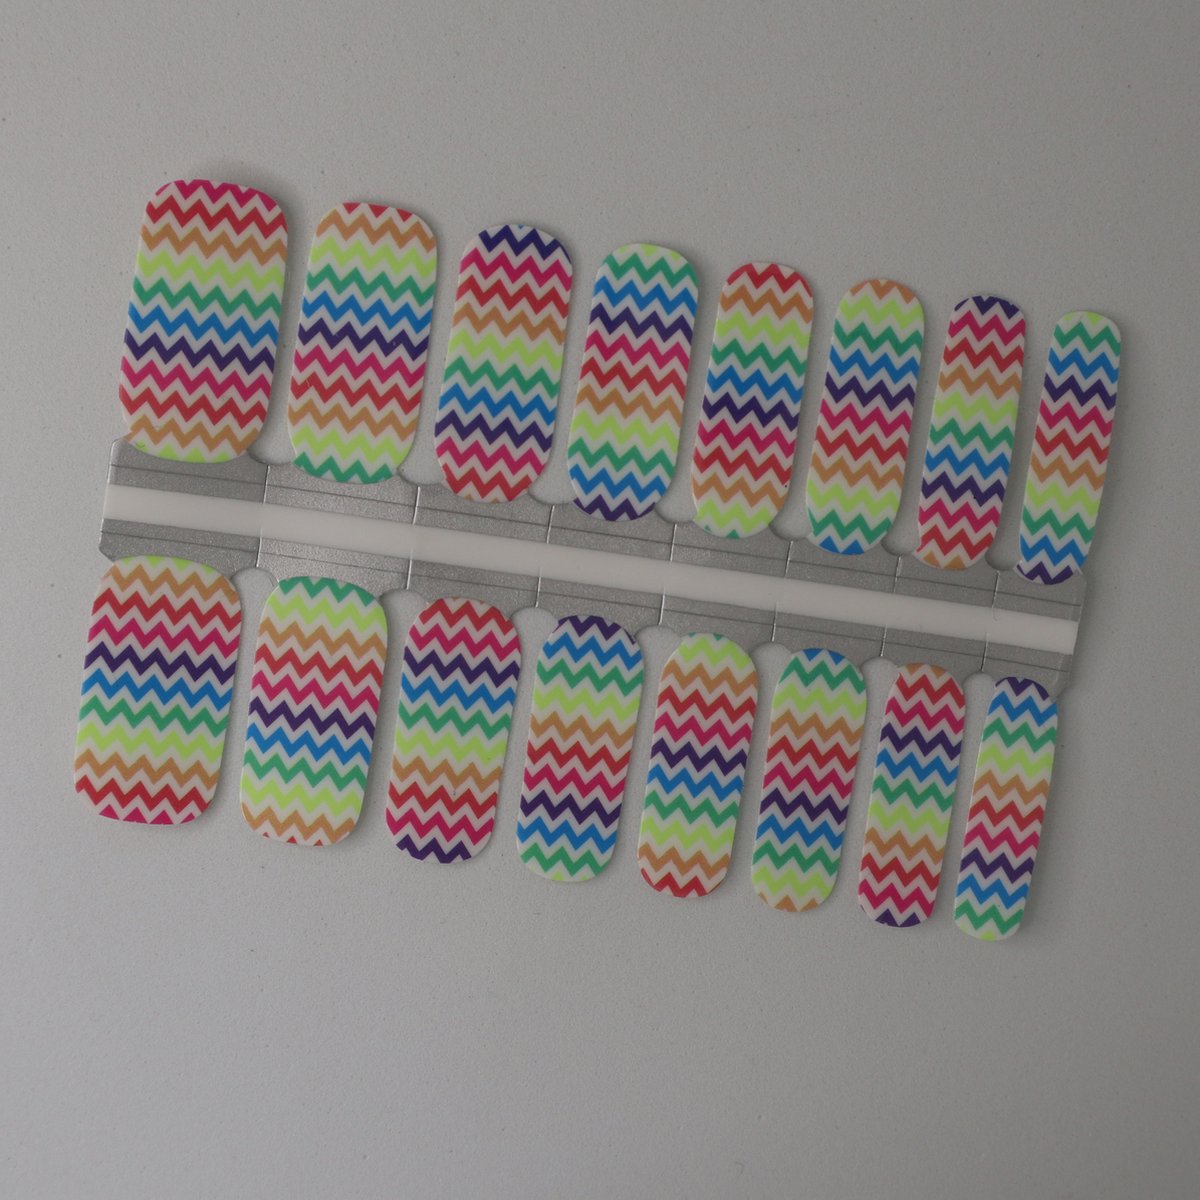 YellowSnails - Nagel Wraps - Rainbow ripples - Nagel Stickers - Nagel Folie - Nail Wraps - Nail Stickers - Nail Art - Nail Foil